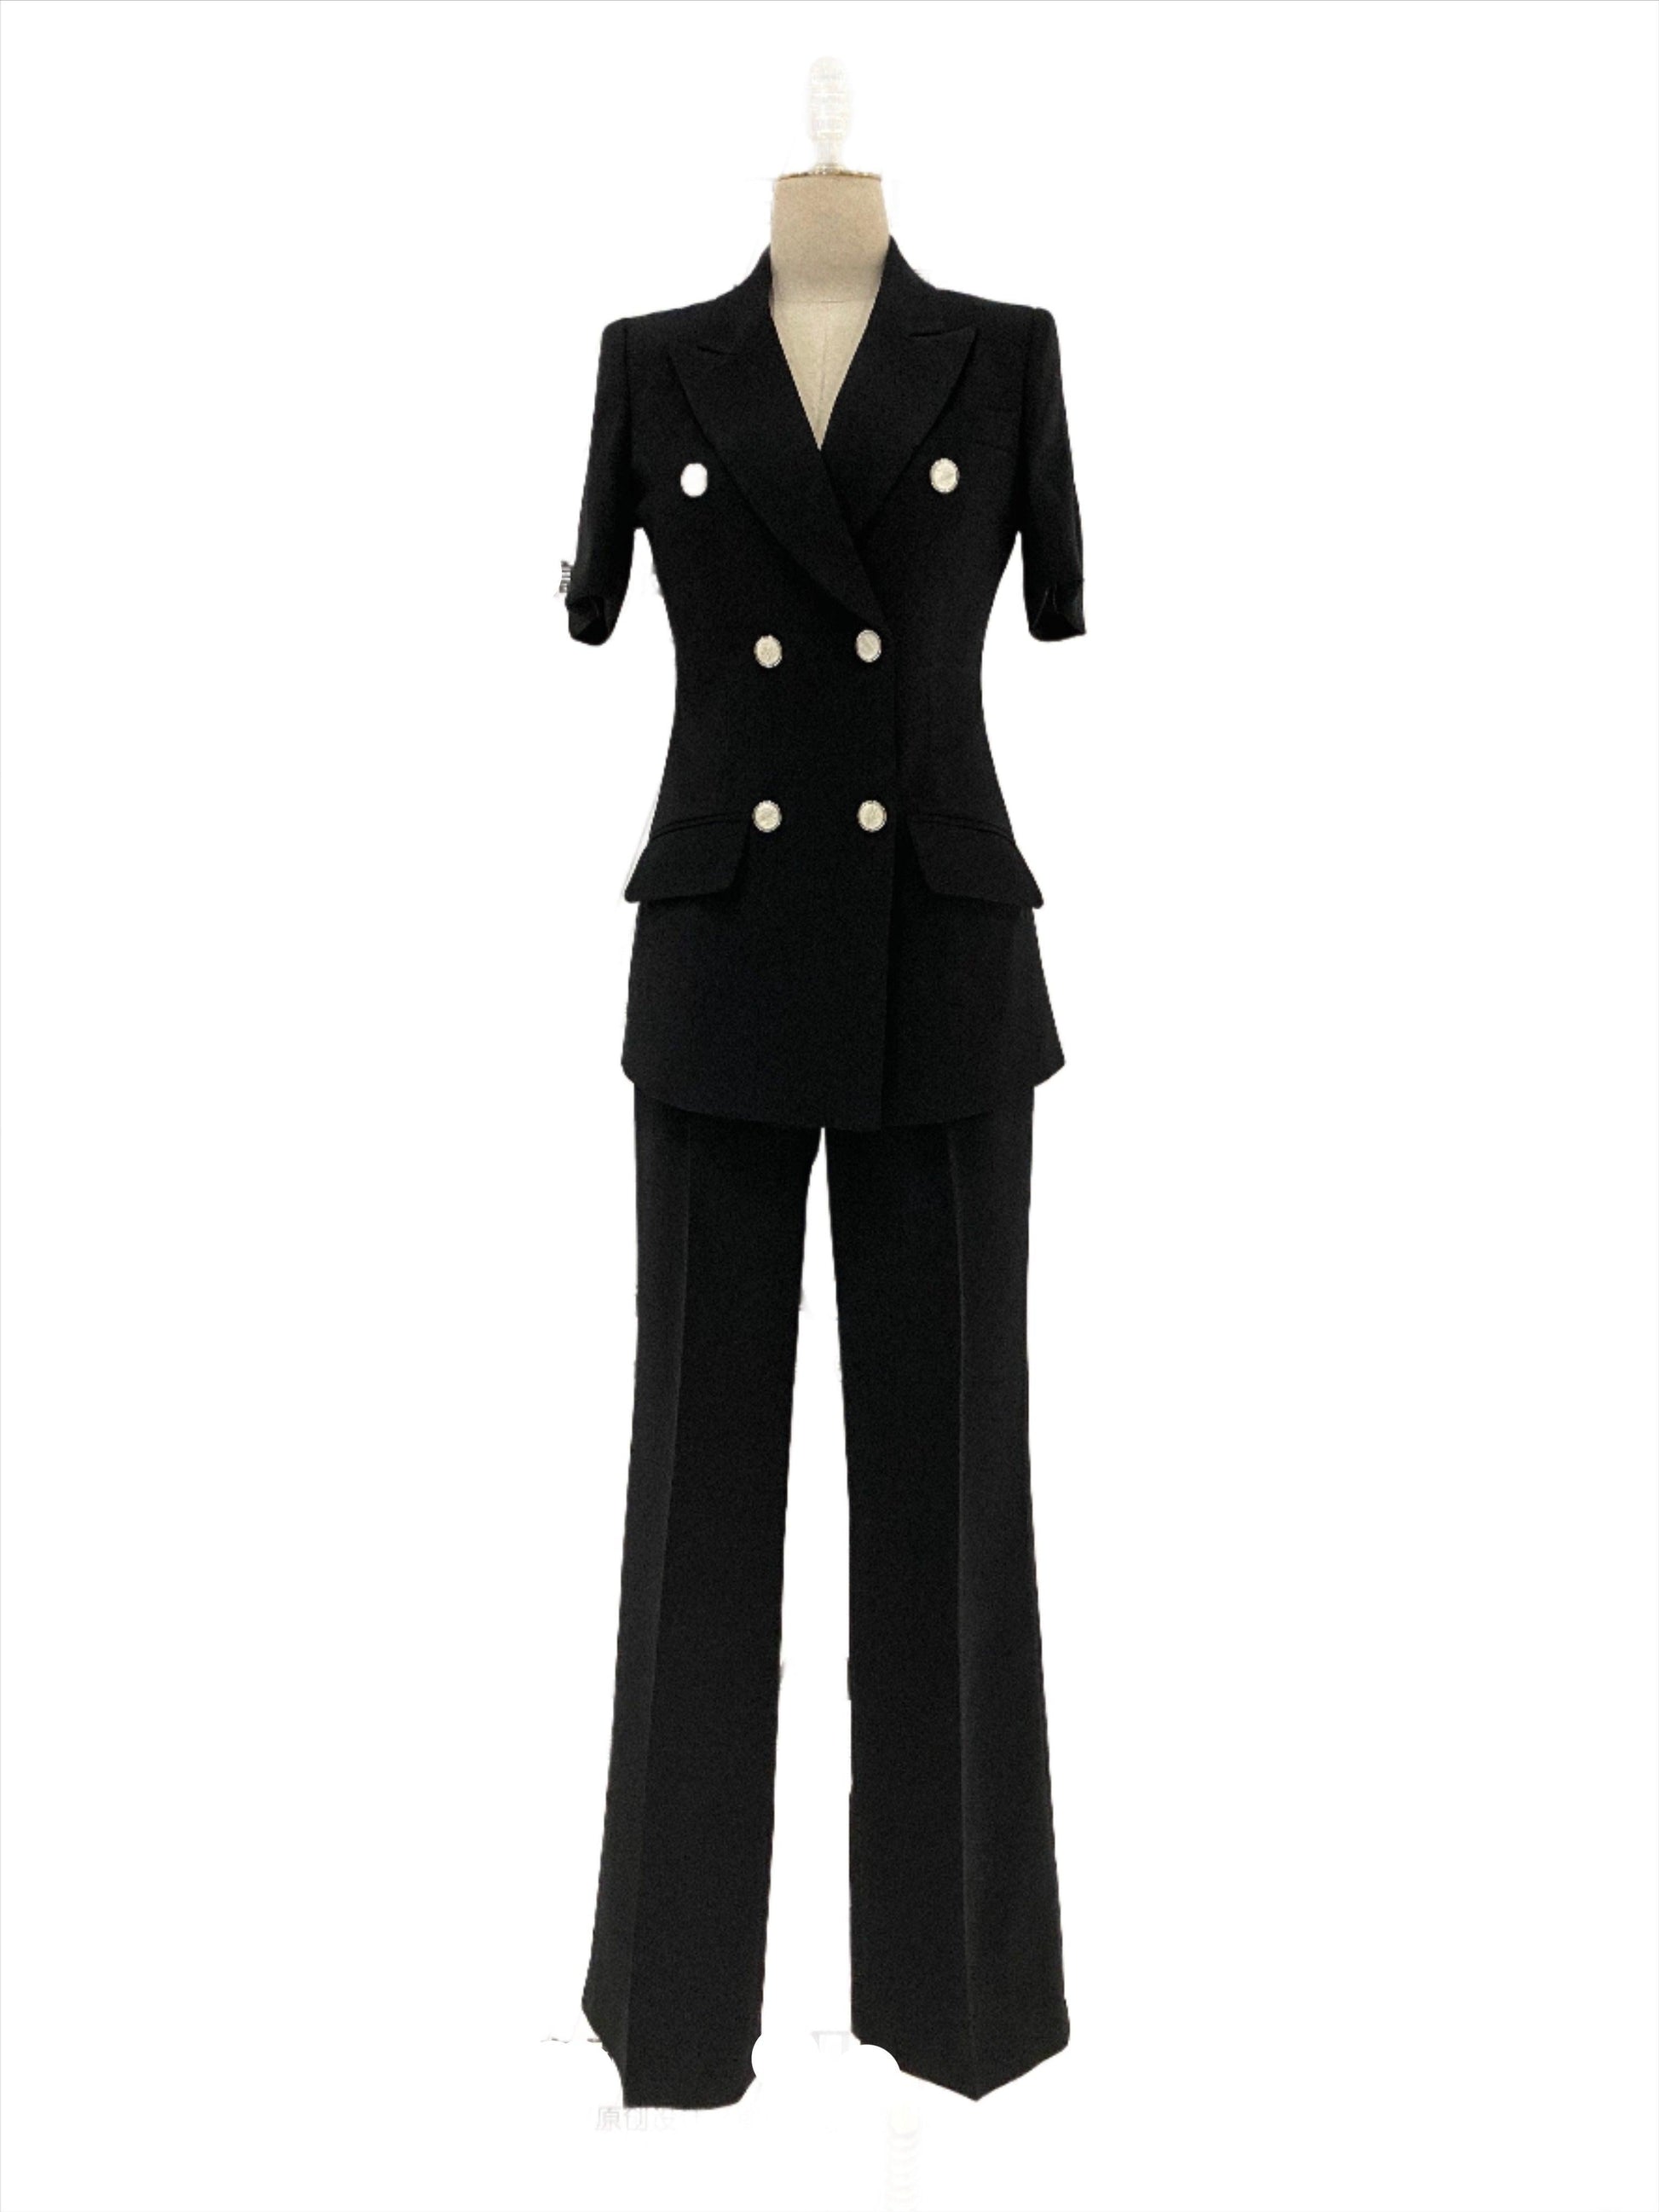 Thin Short Sleeved Women Pant Suit, Off-White, Black - Pantsuit - Guocali